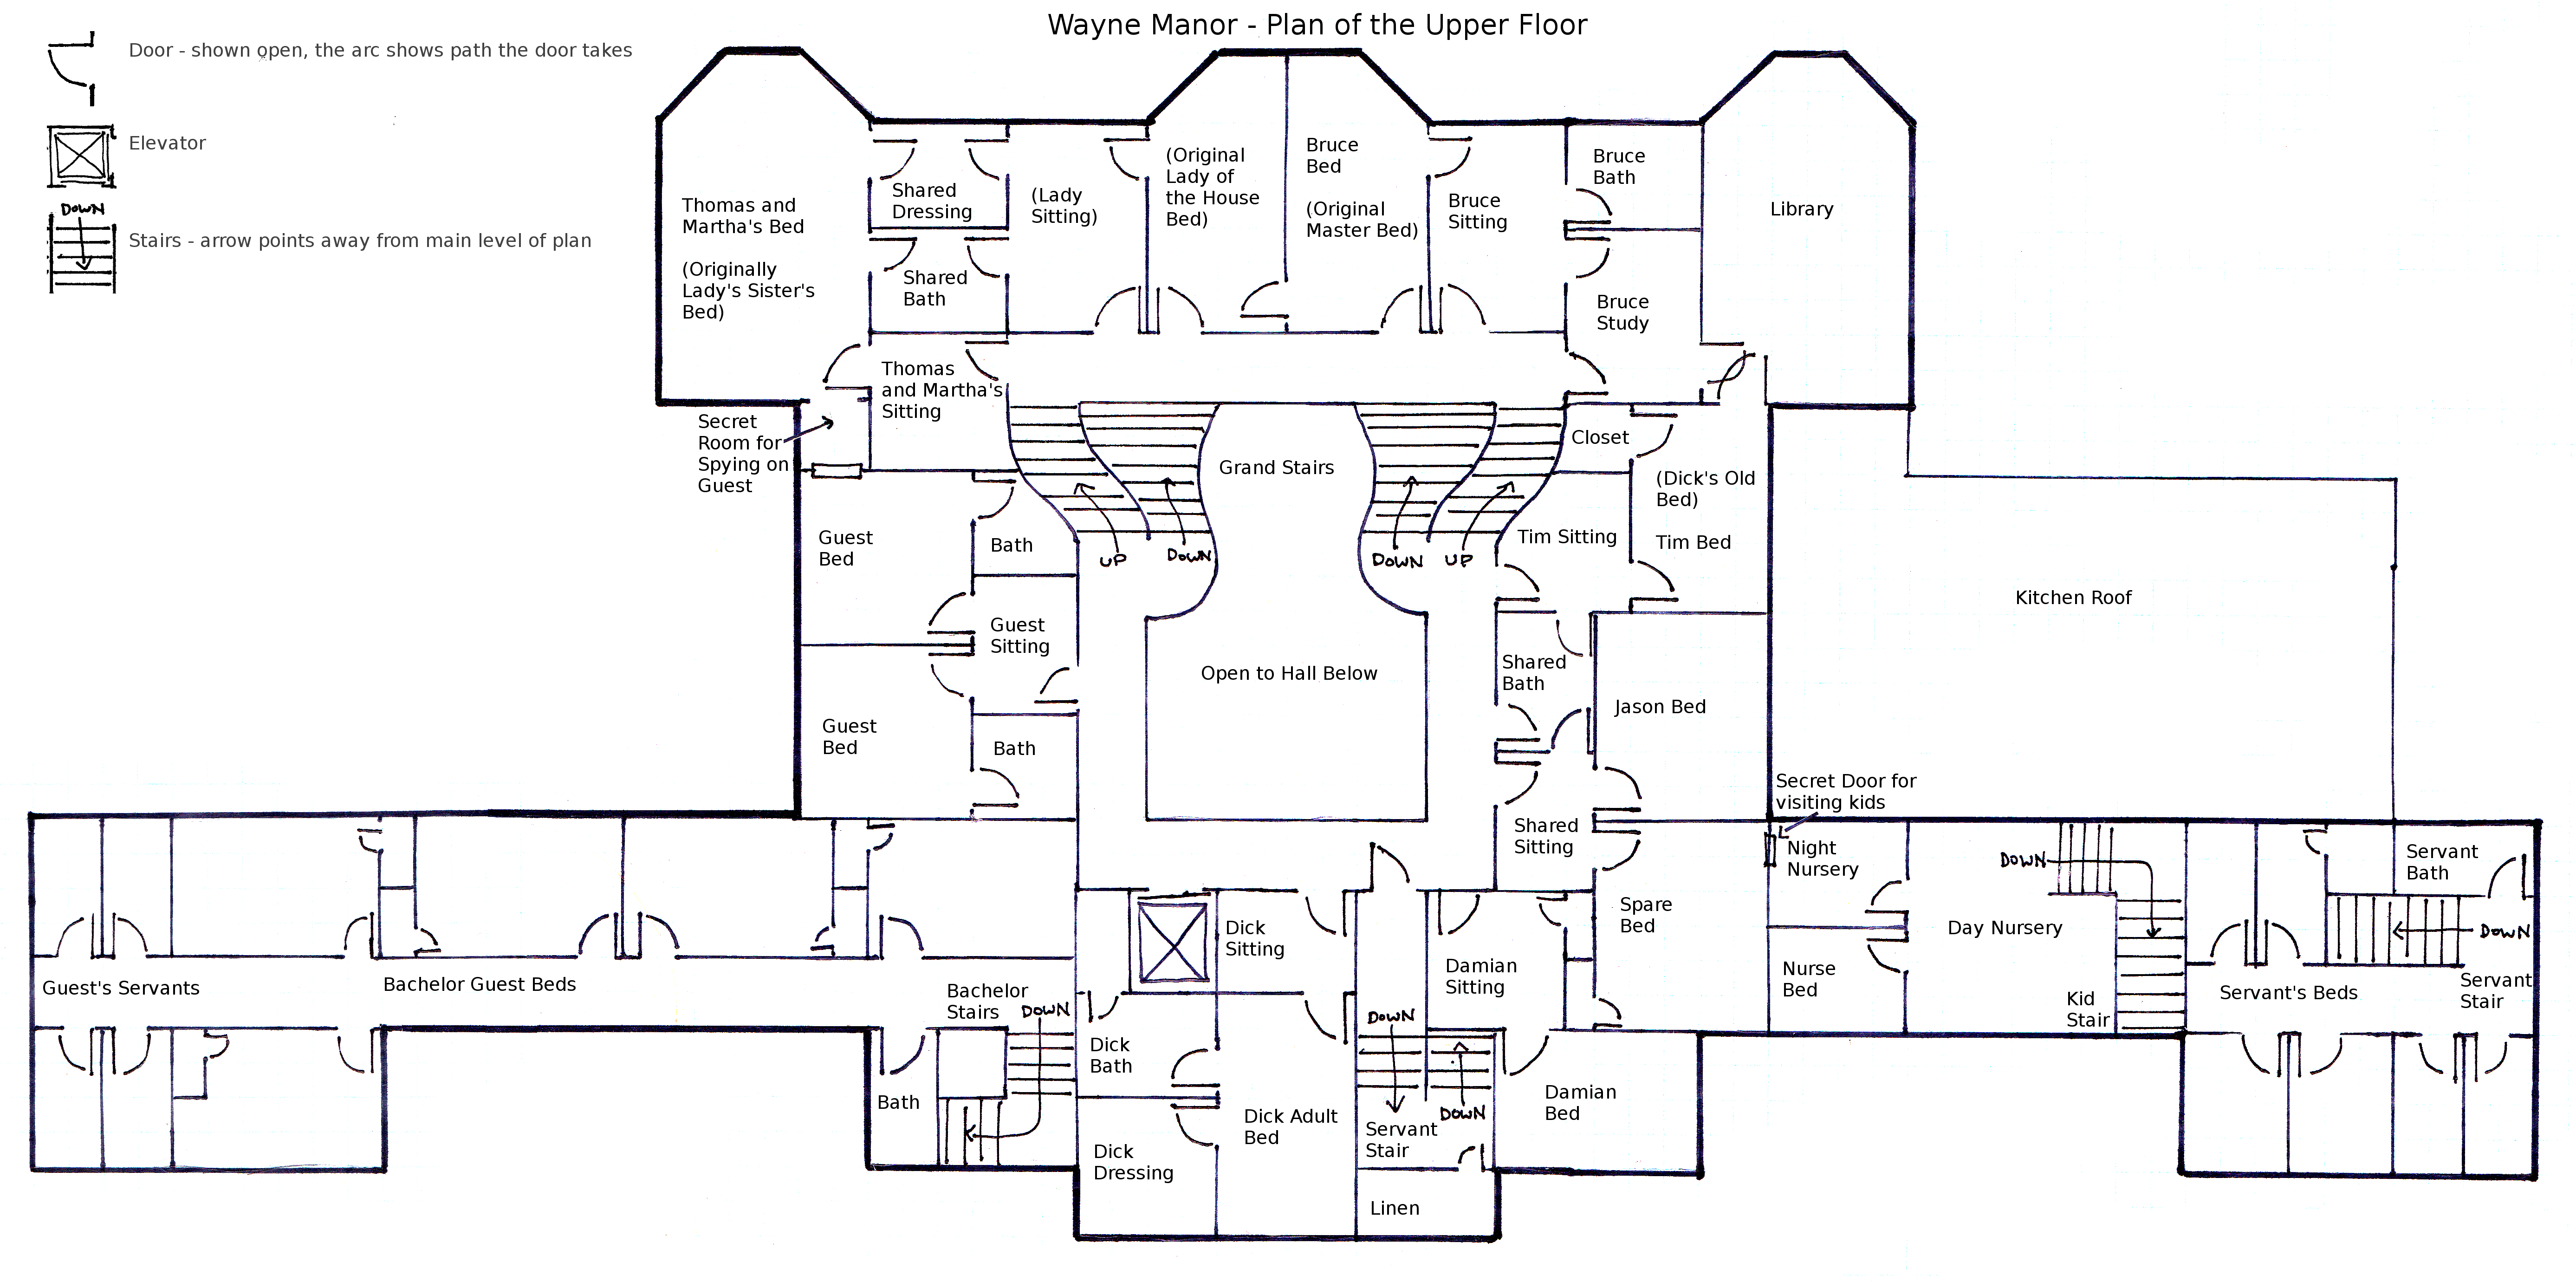 Wayne Manor Upper Floor Plan by geckobot on DeviantArt